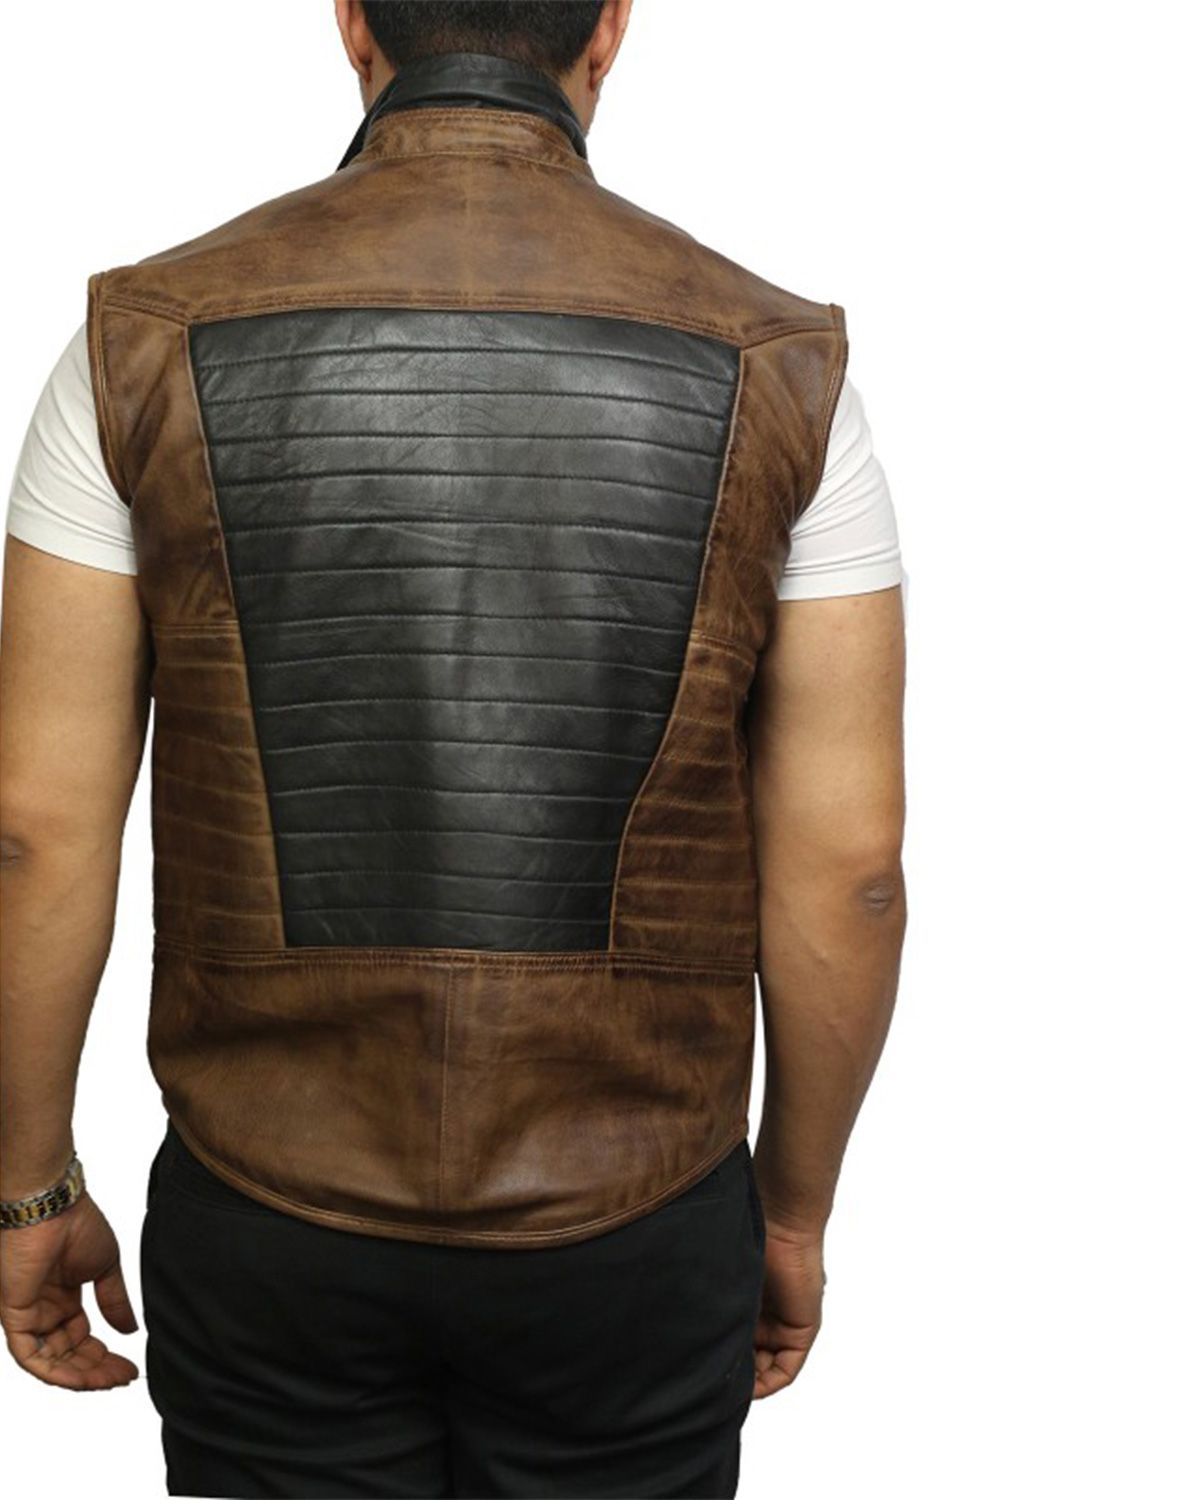 Elite Men's Black and Brown Body Warmer Leather Vest